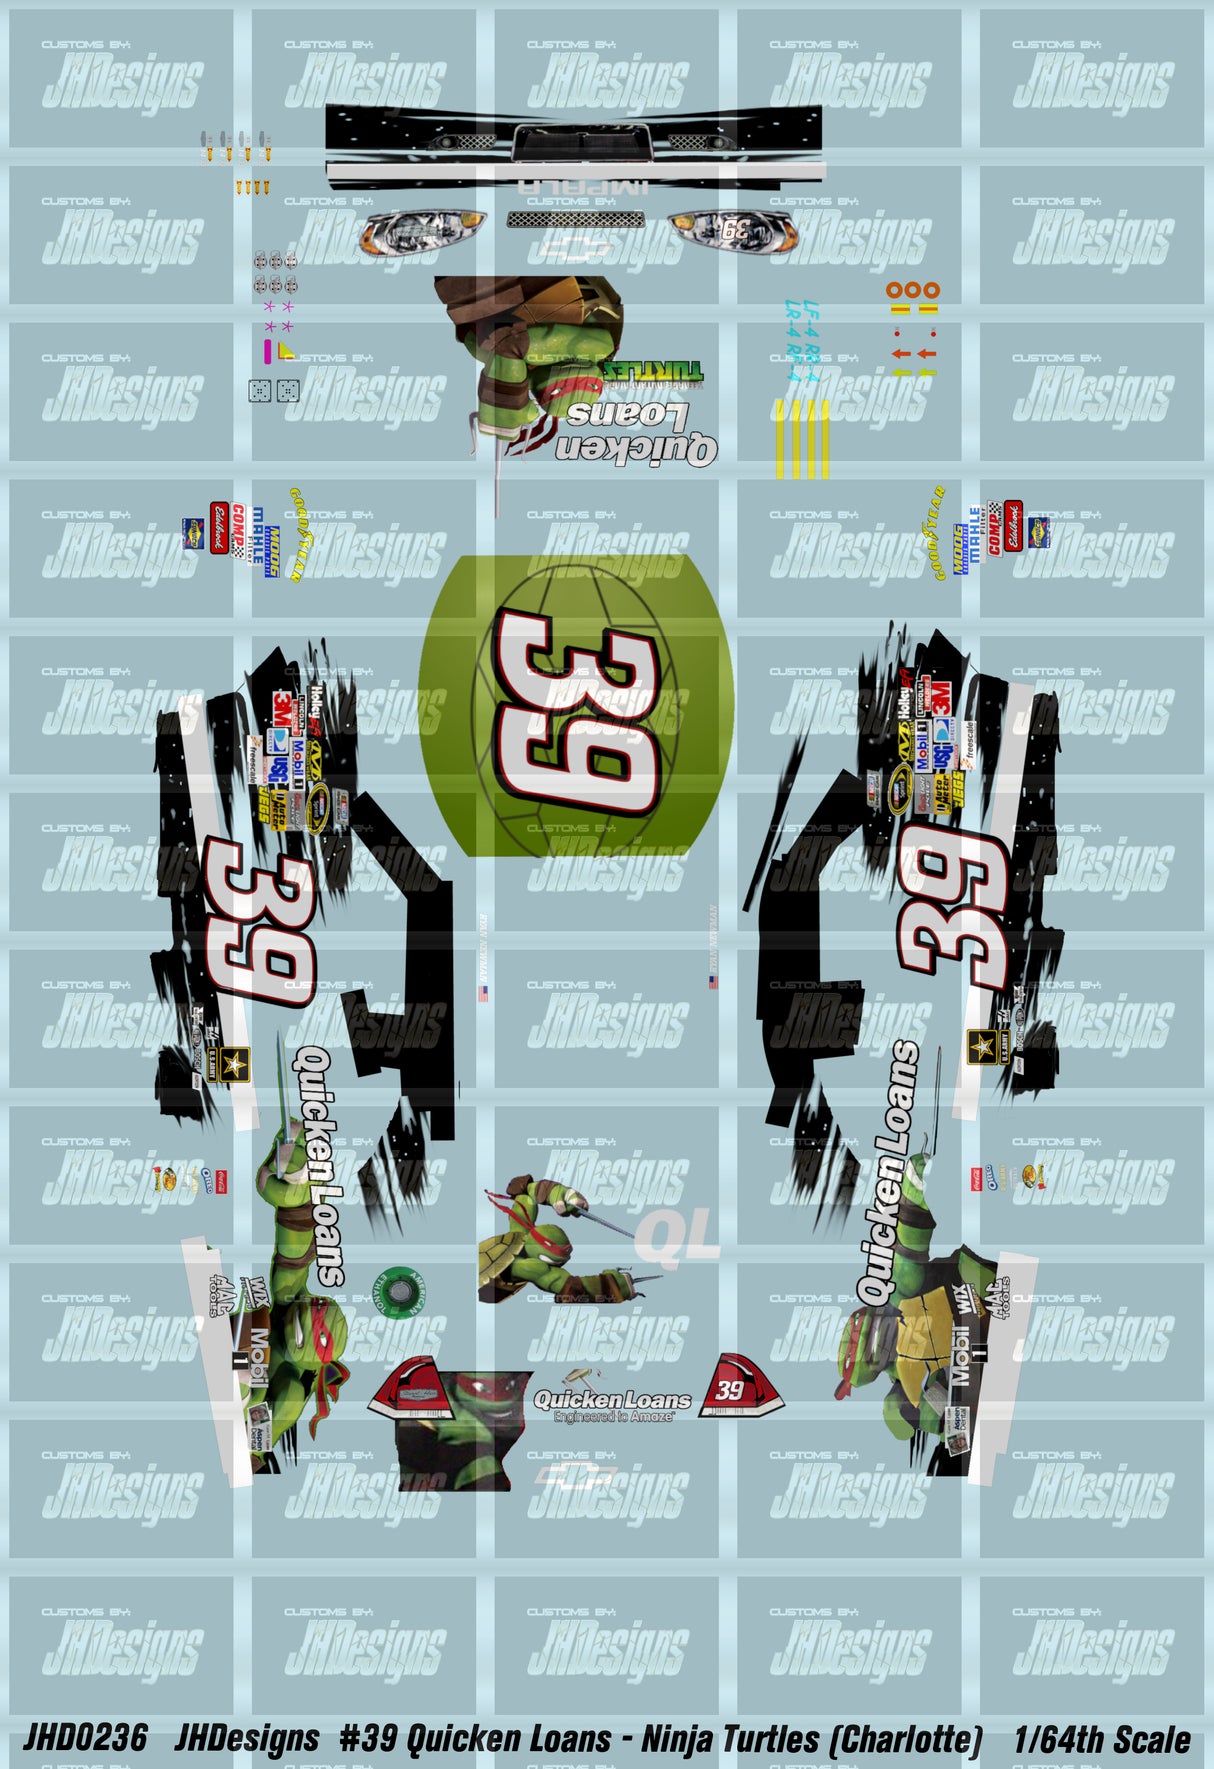 JH Designs Ryan Newman 2012 CUP #39 Quicken Loans - Ninja Turtles (Charlotte Race) 1:64 Racecar Decal Set